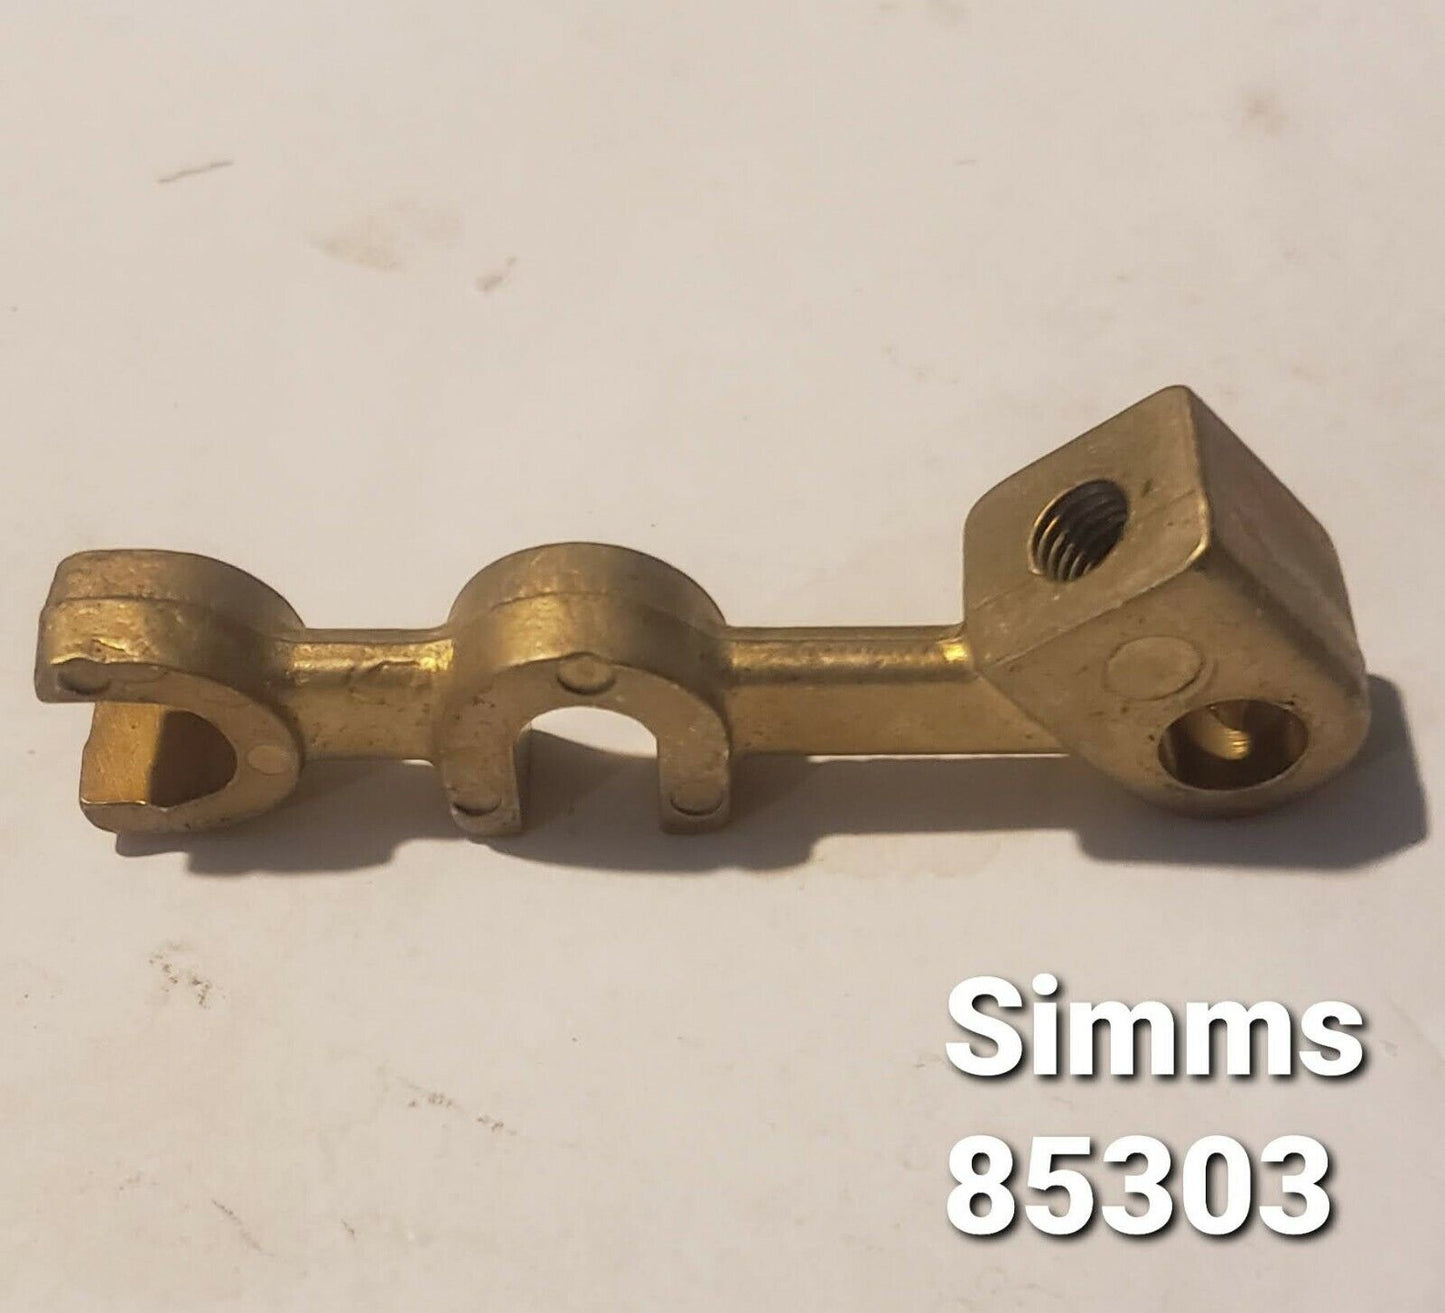 Lucas Cav Simms LINK 85303 for Simms Injection Pump.